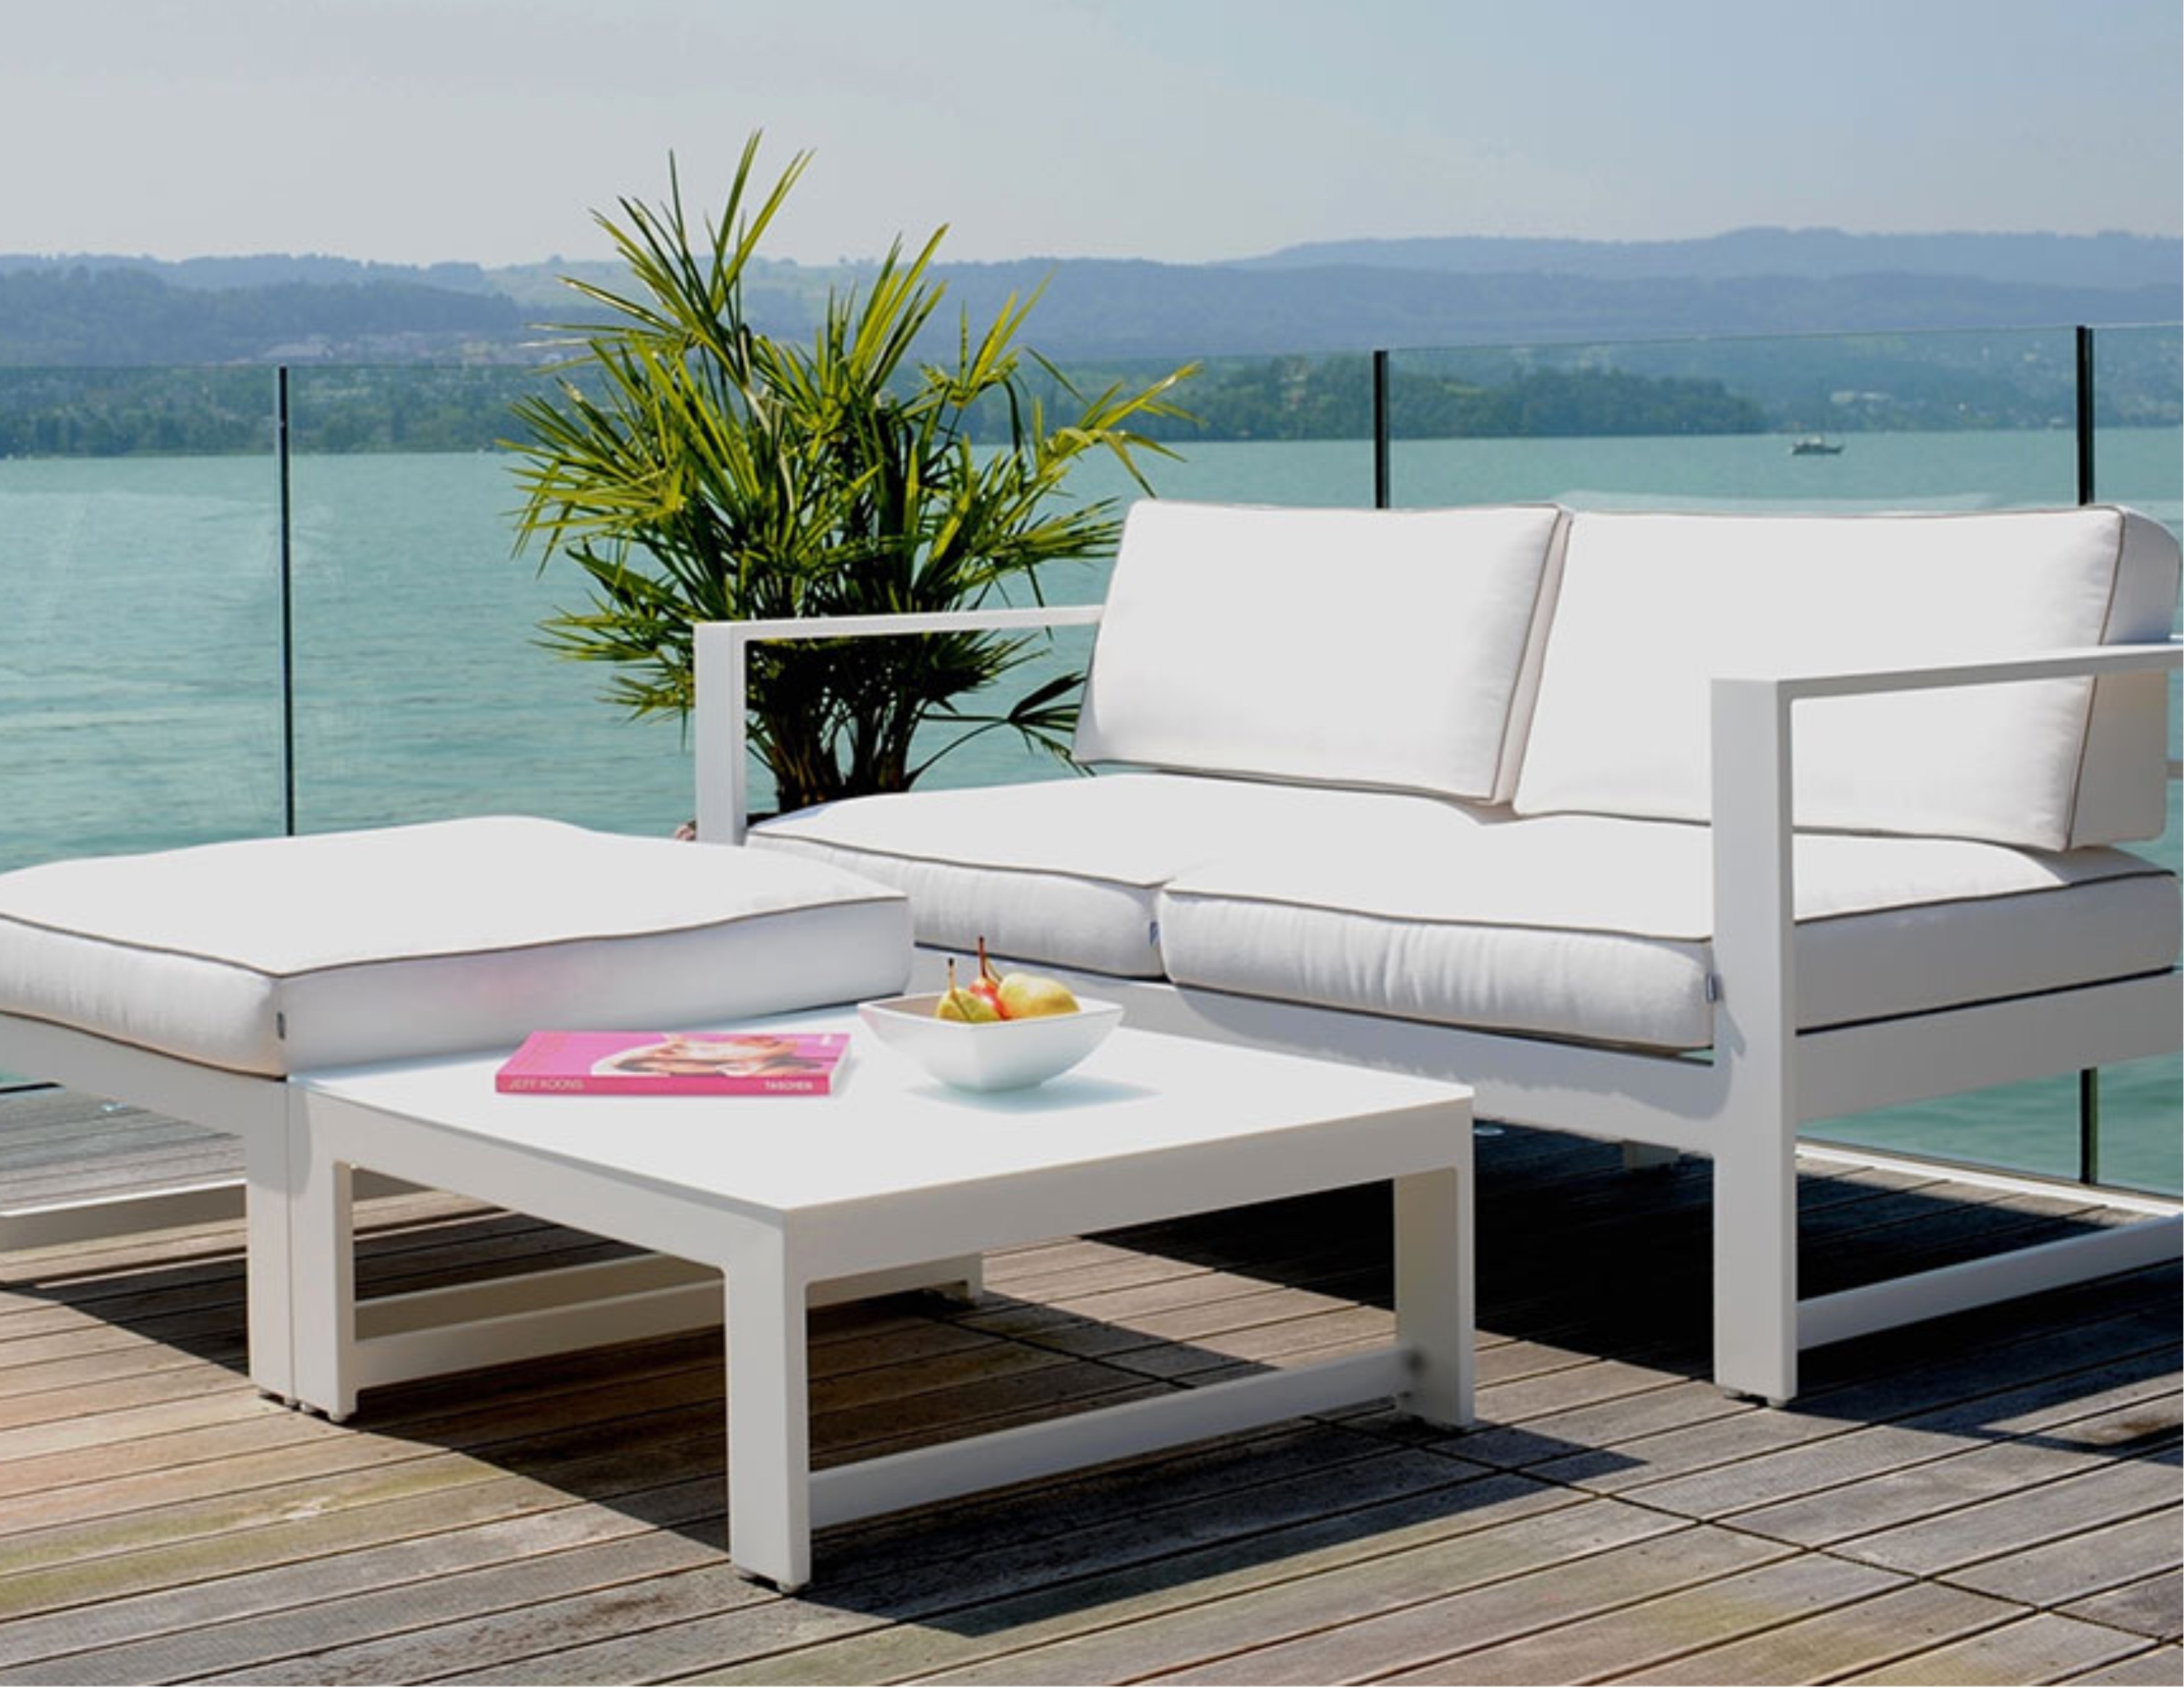  Summer  Modular Sofa  by Rausch Couture Outdoor